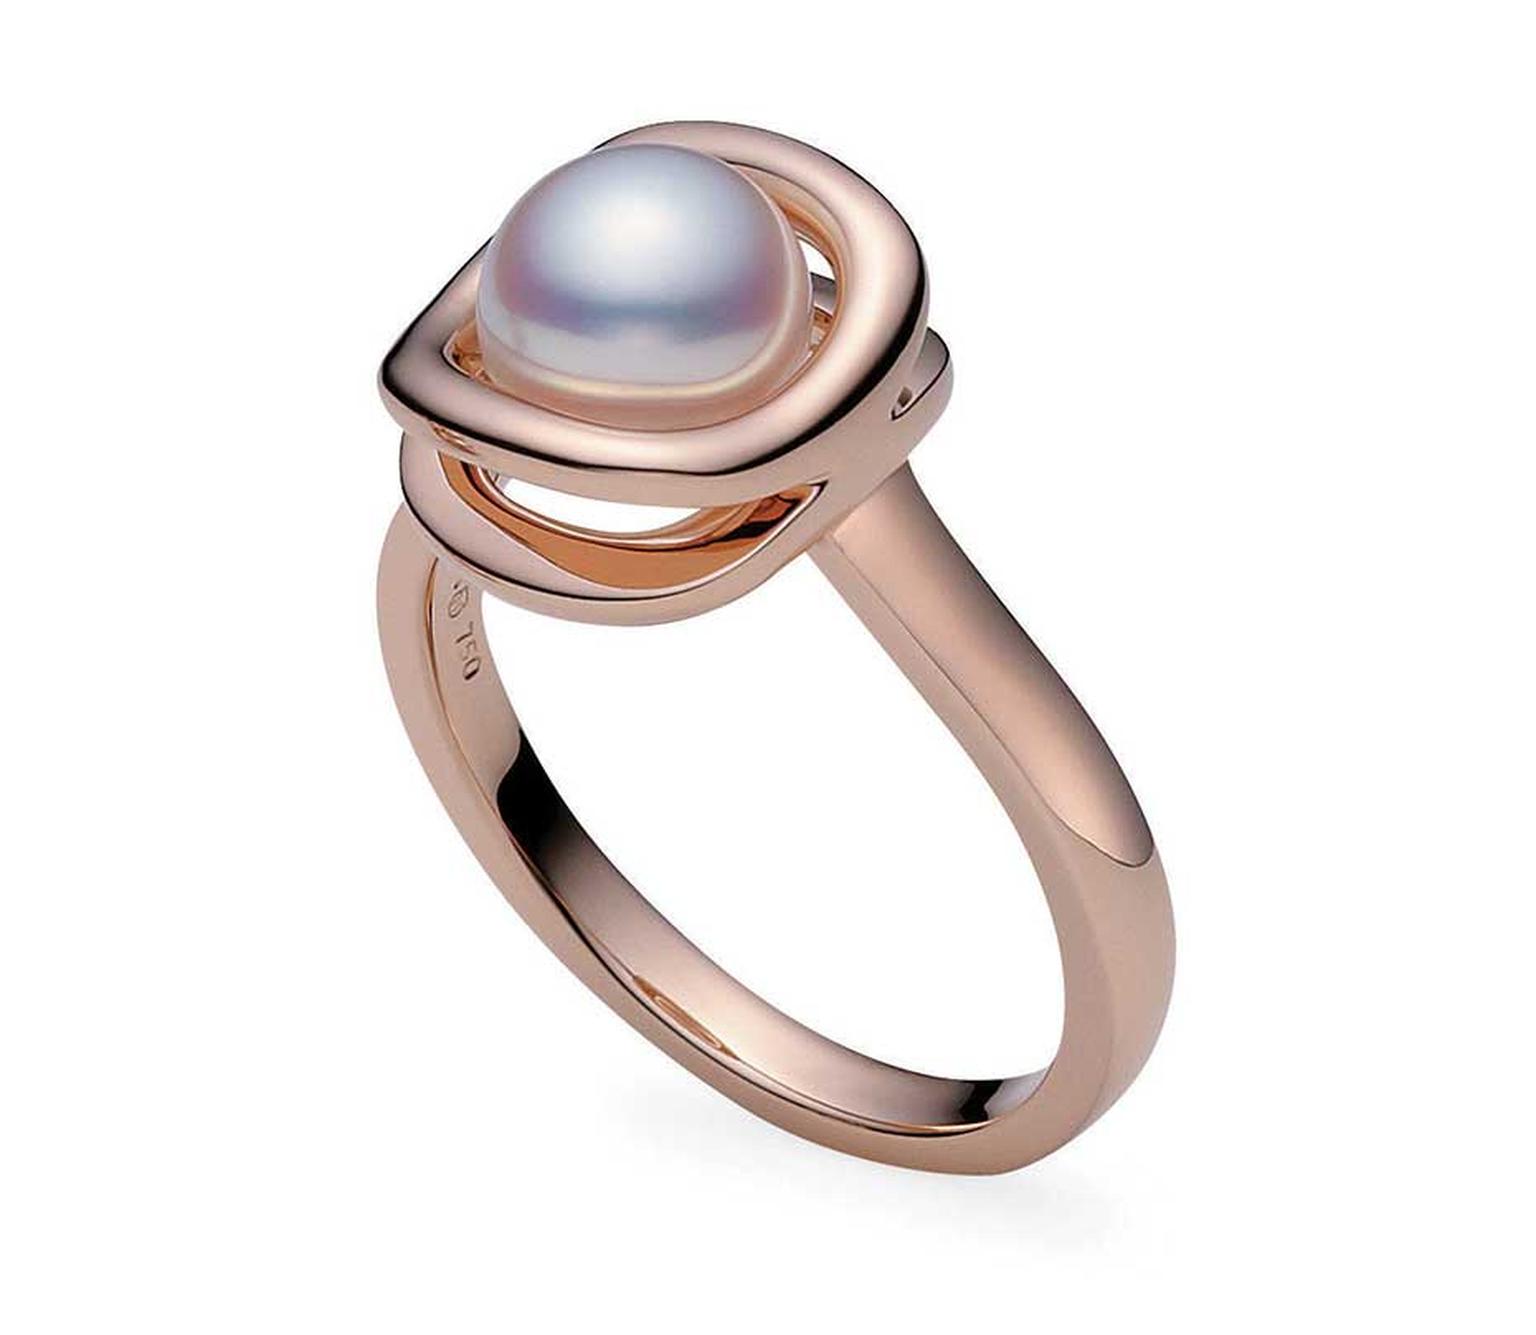 Mikimoto Sweets Akoya pearl and rose gold ring (£1,350).